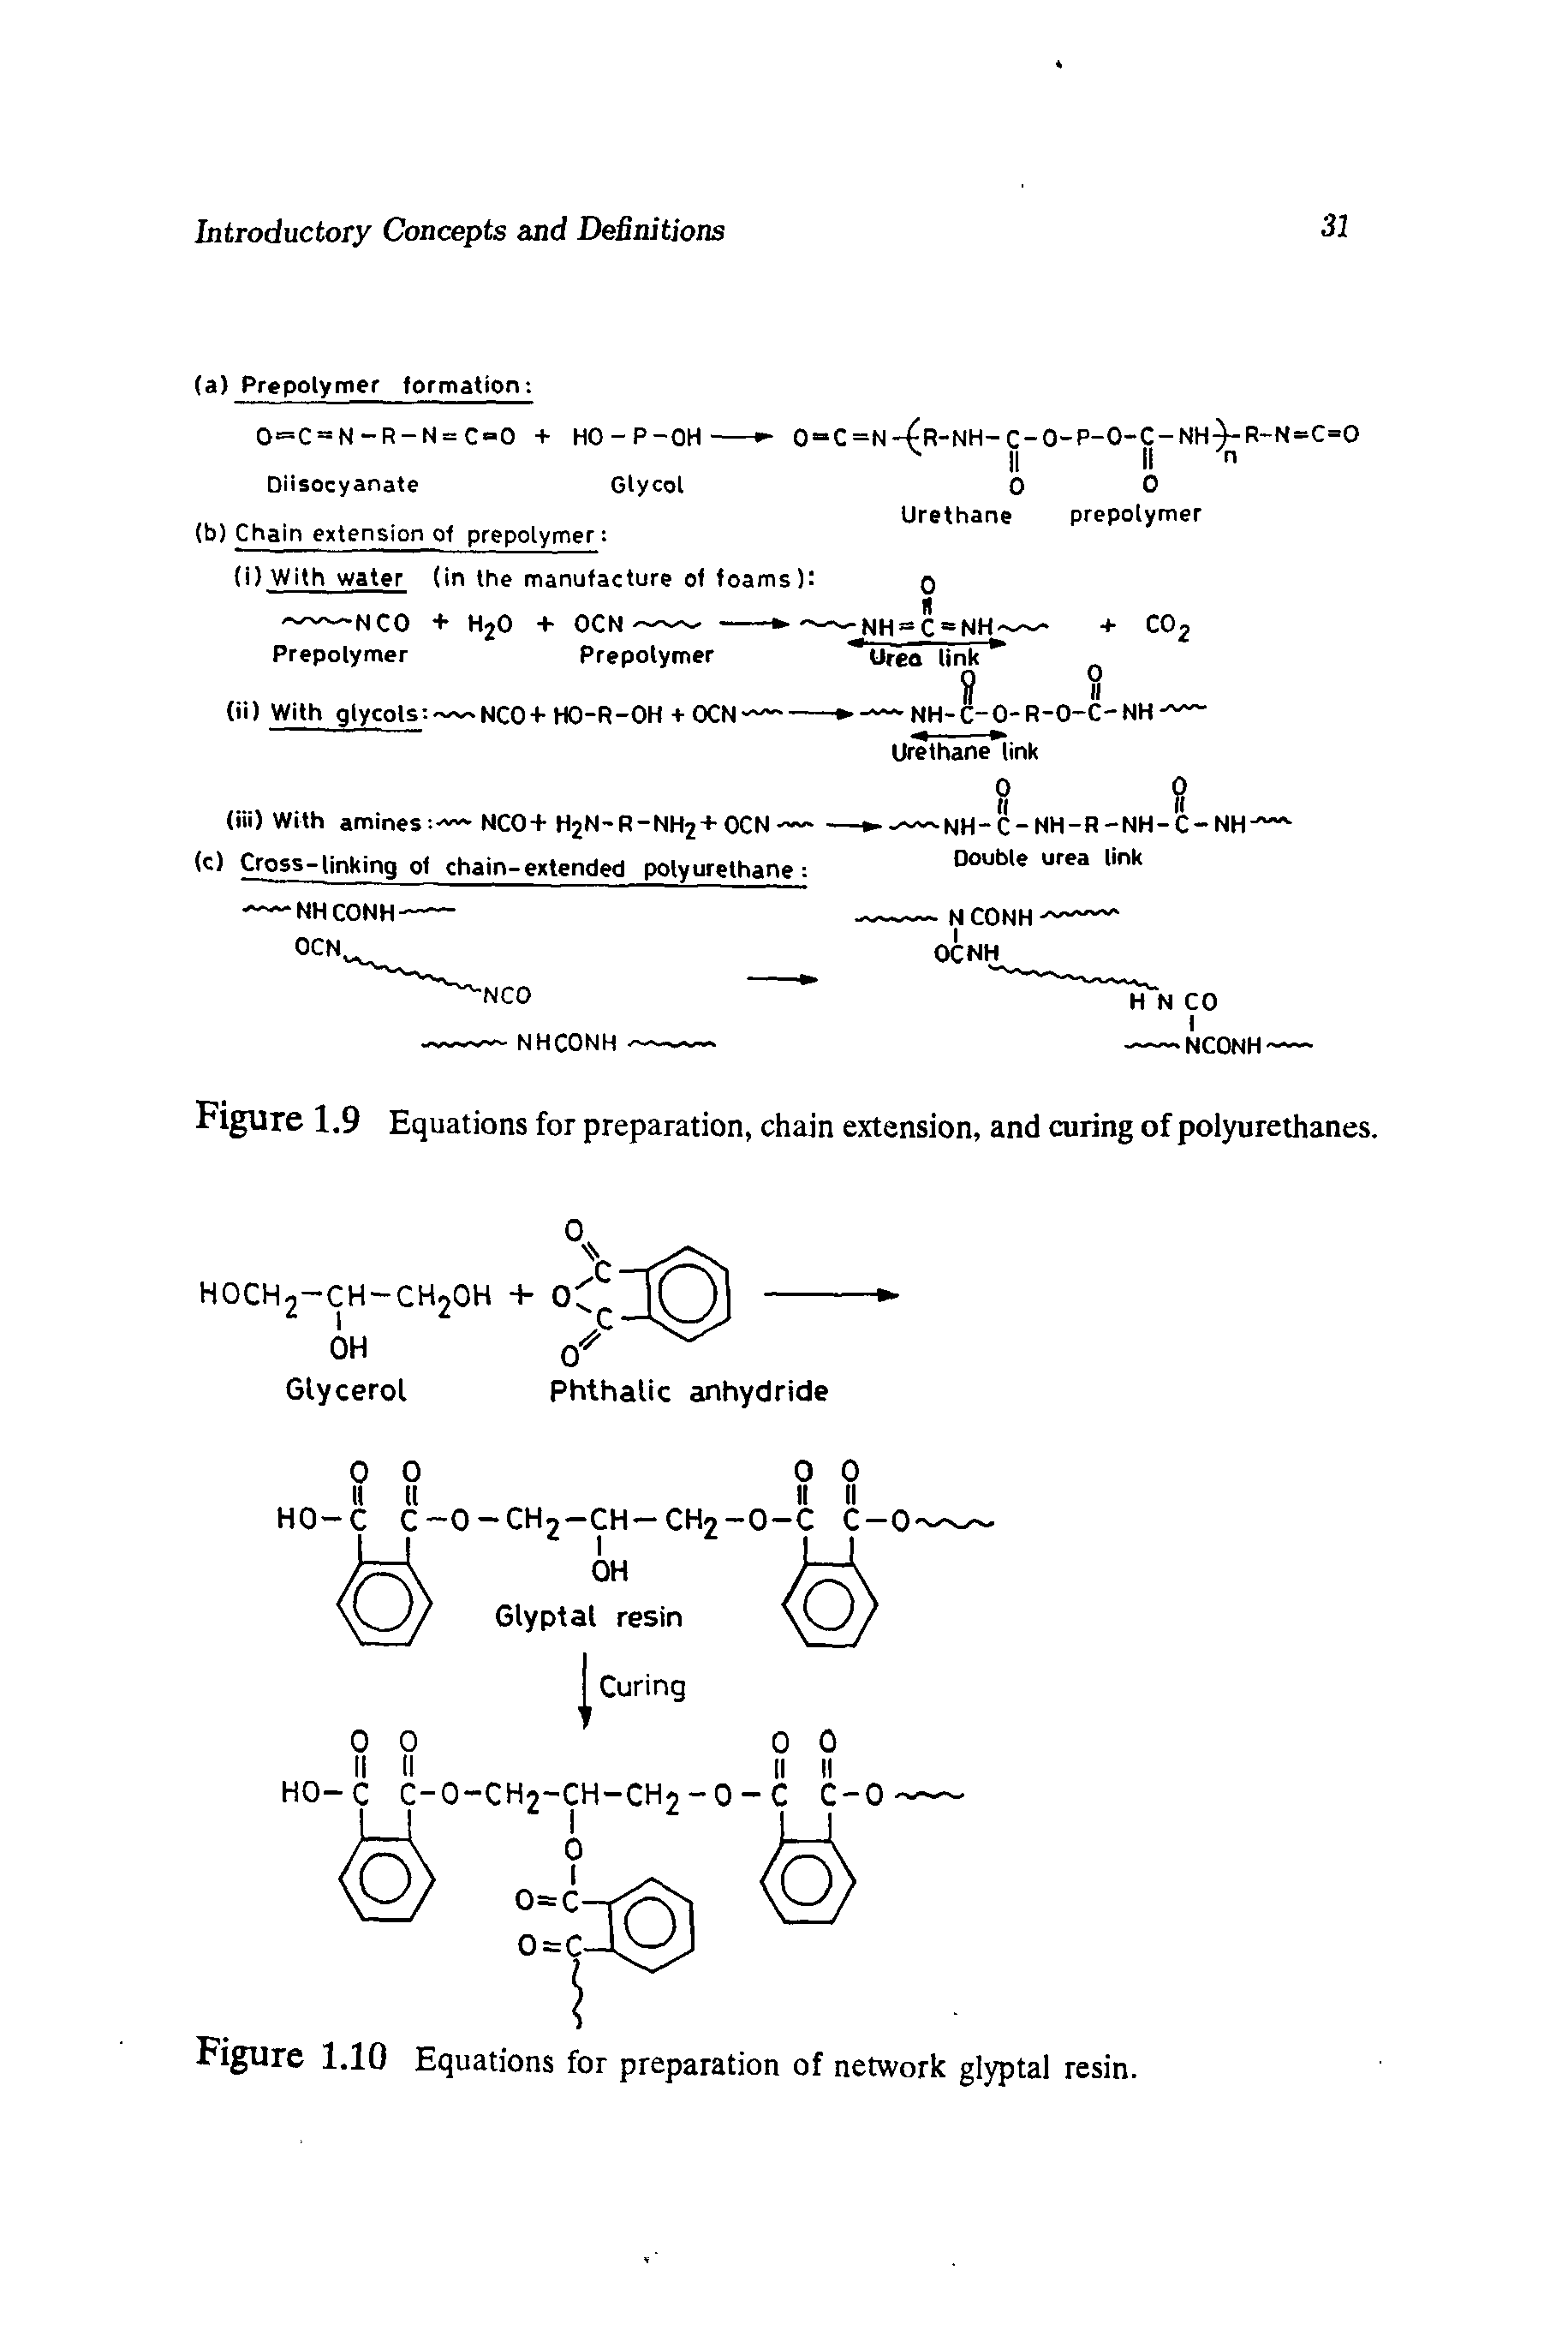 Figure 1.10 Equations for preparation of network glyptal resin.